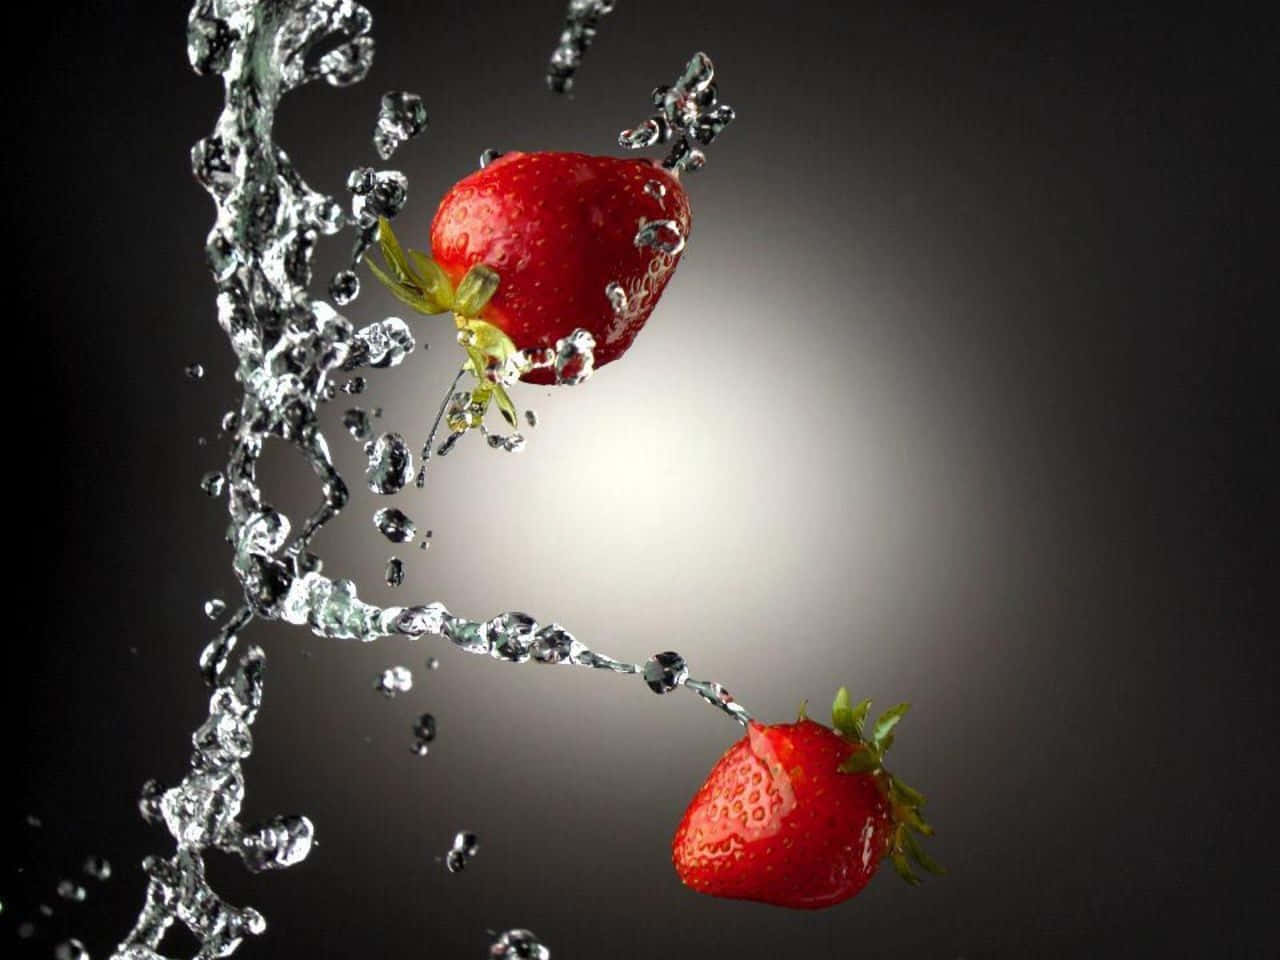 Red Strawberry 1280 X 960 Wallpaper Wallpaper